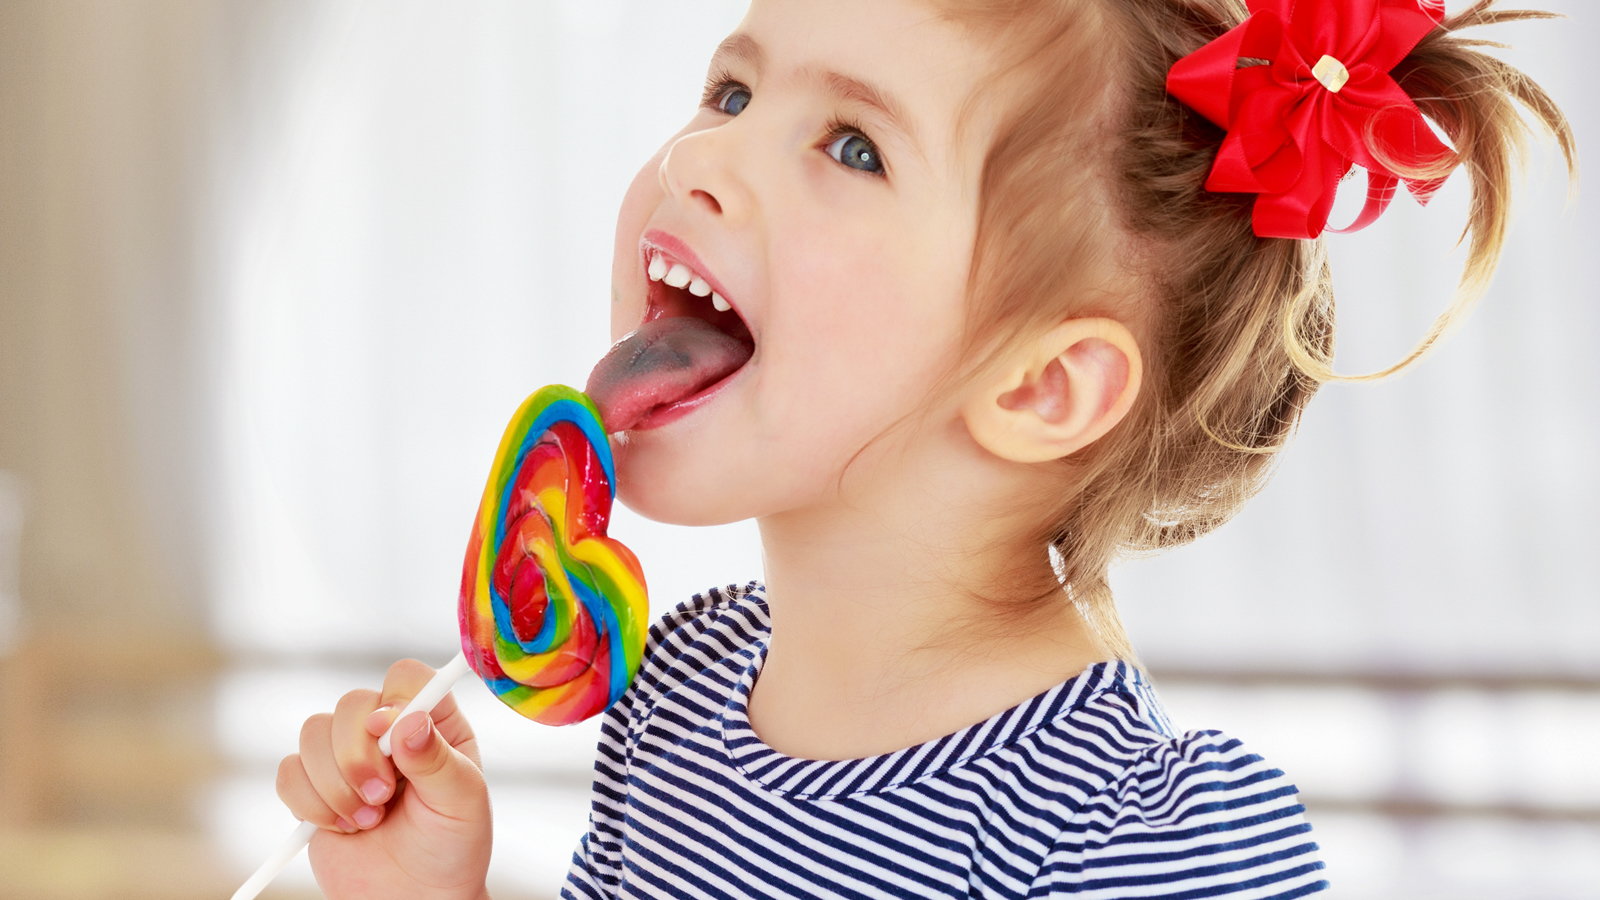 child licking lollypop